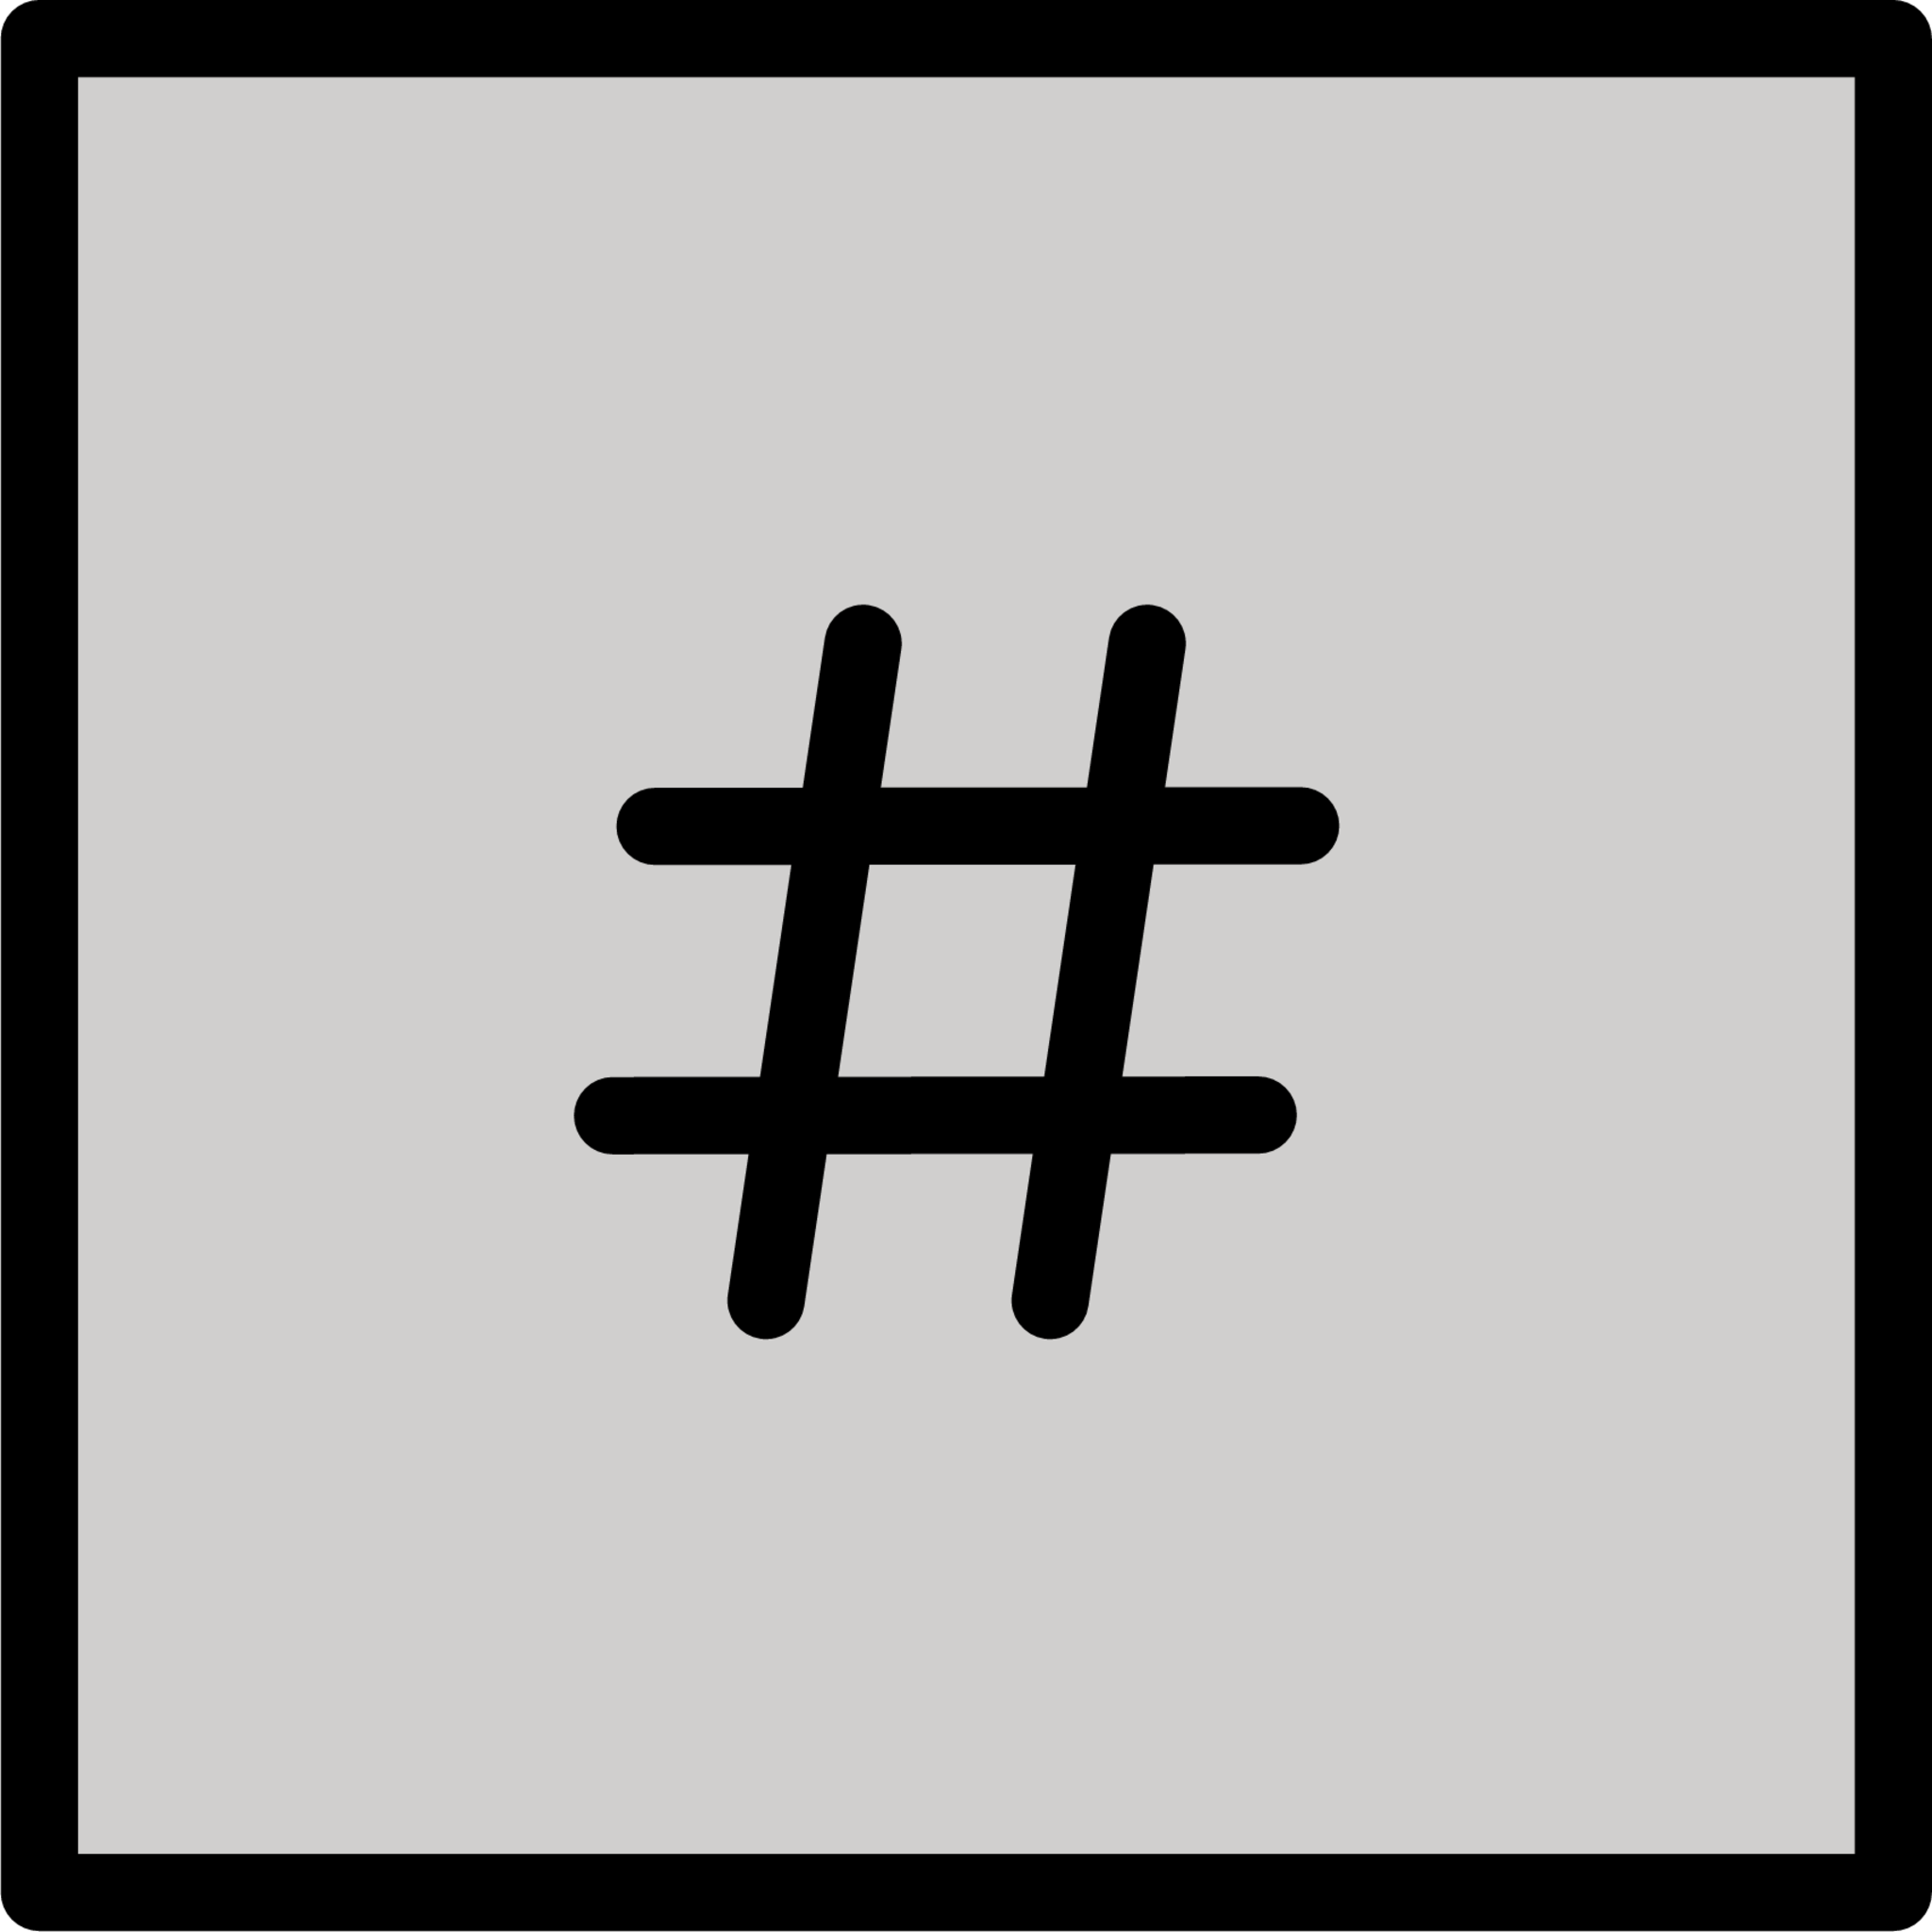 keycap: # emoji